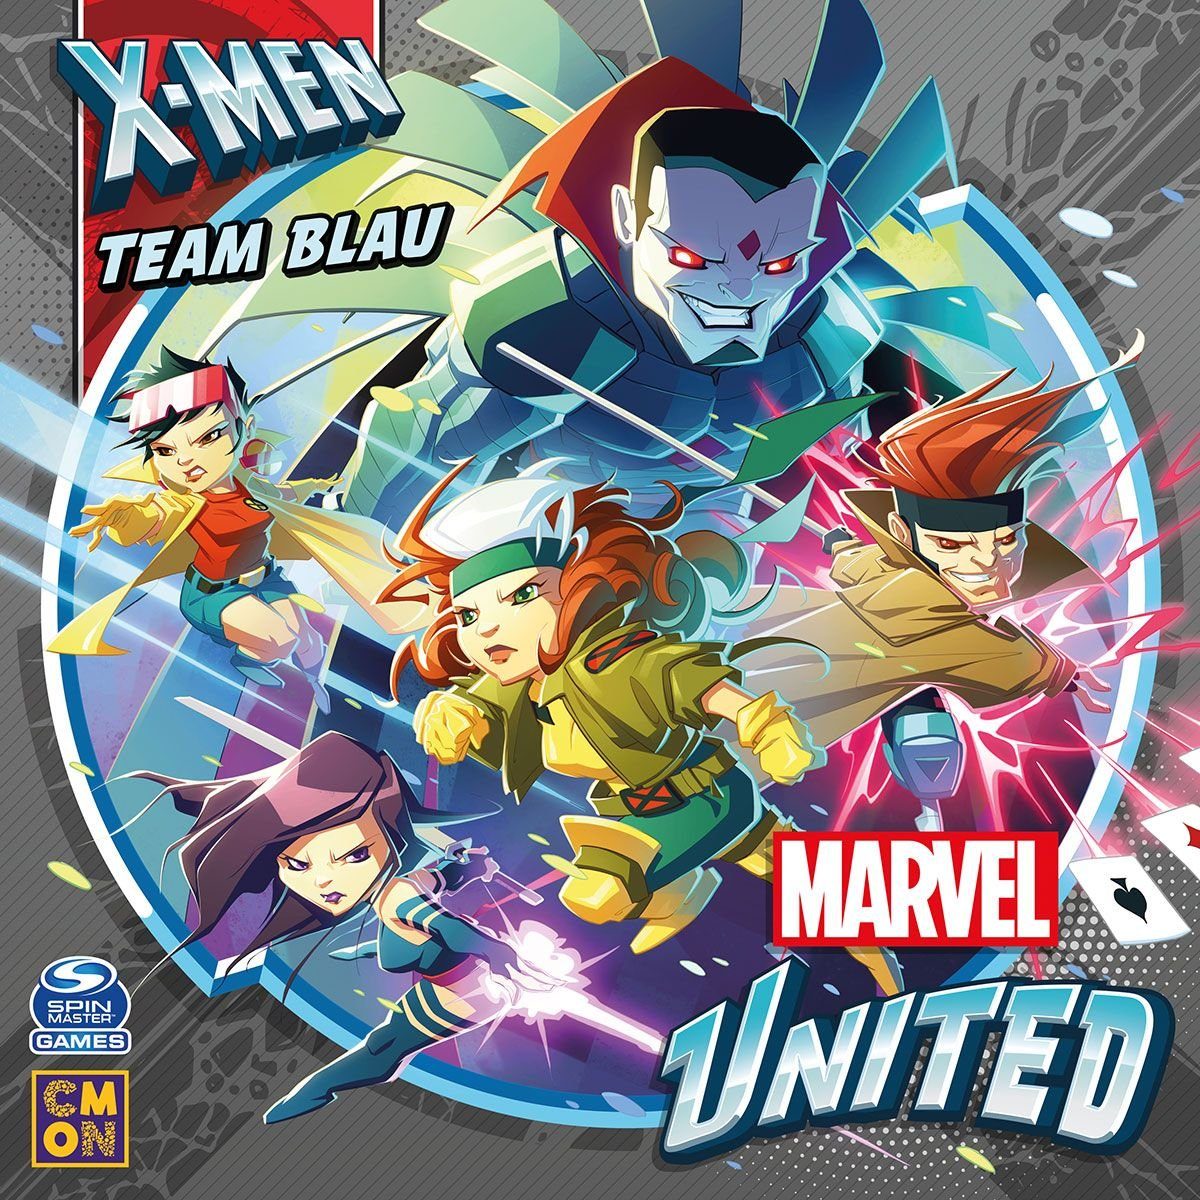 CoolMiniOrNot Spiel, CMON - Marvel United X-Men - Team Blau CMON - Marvel United X-Men - Team Blau